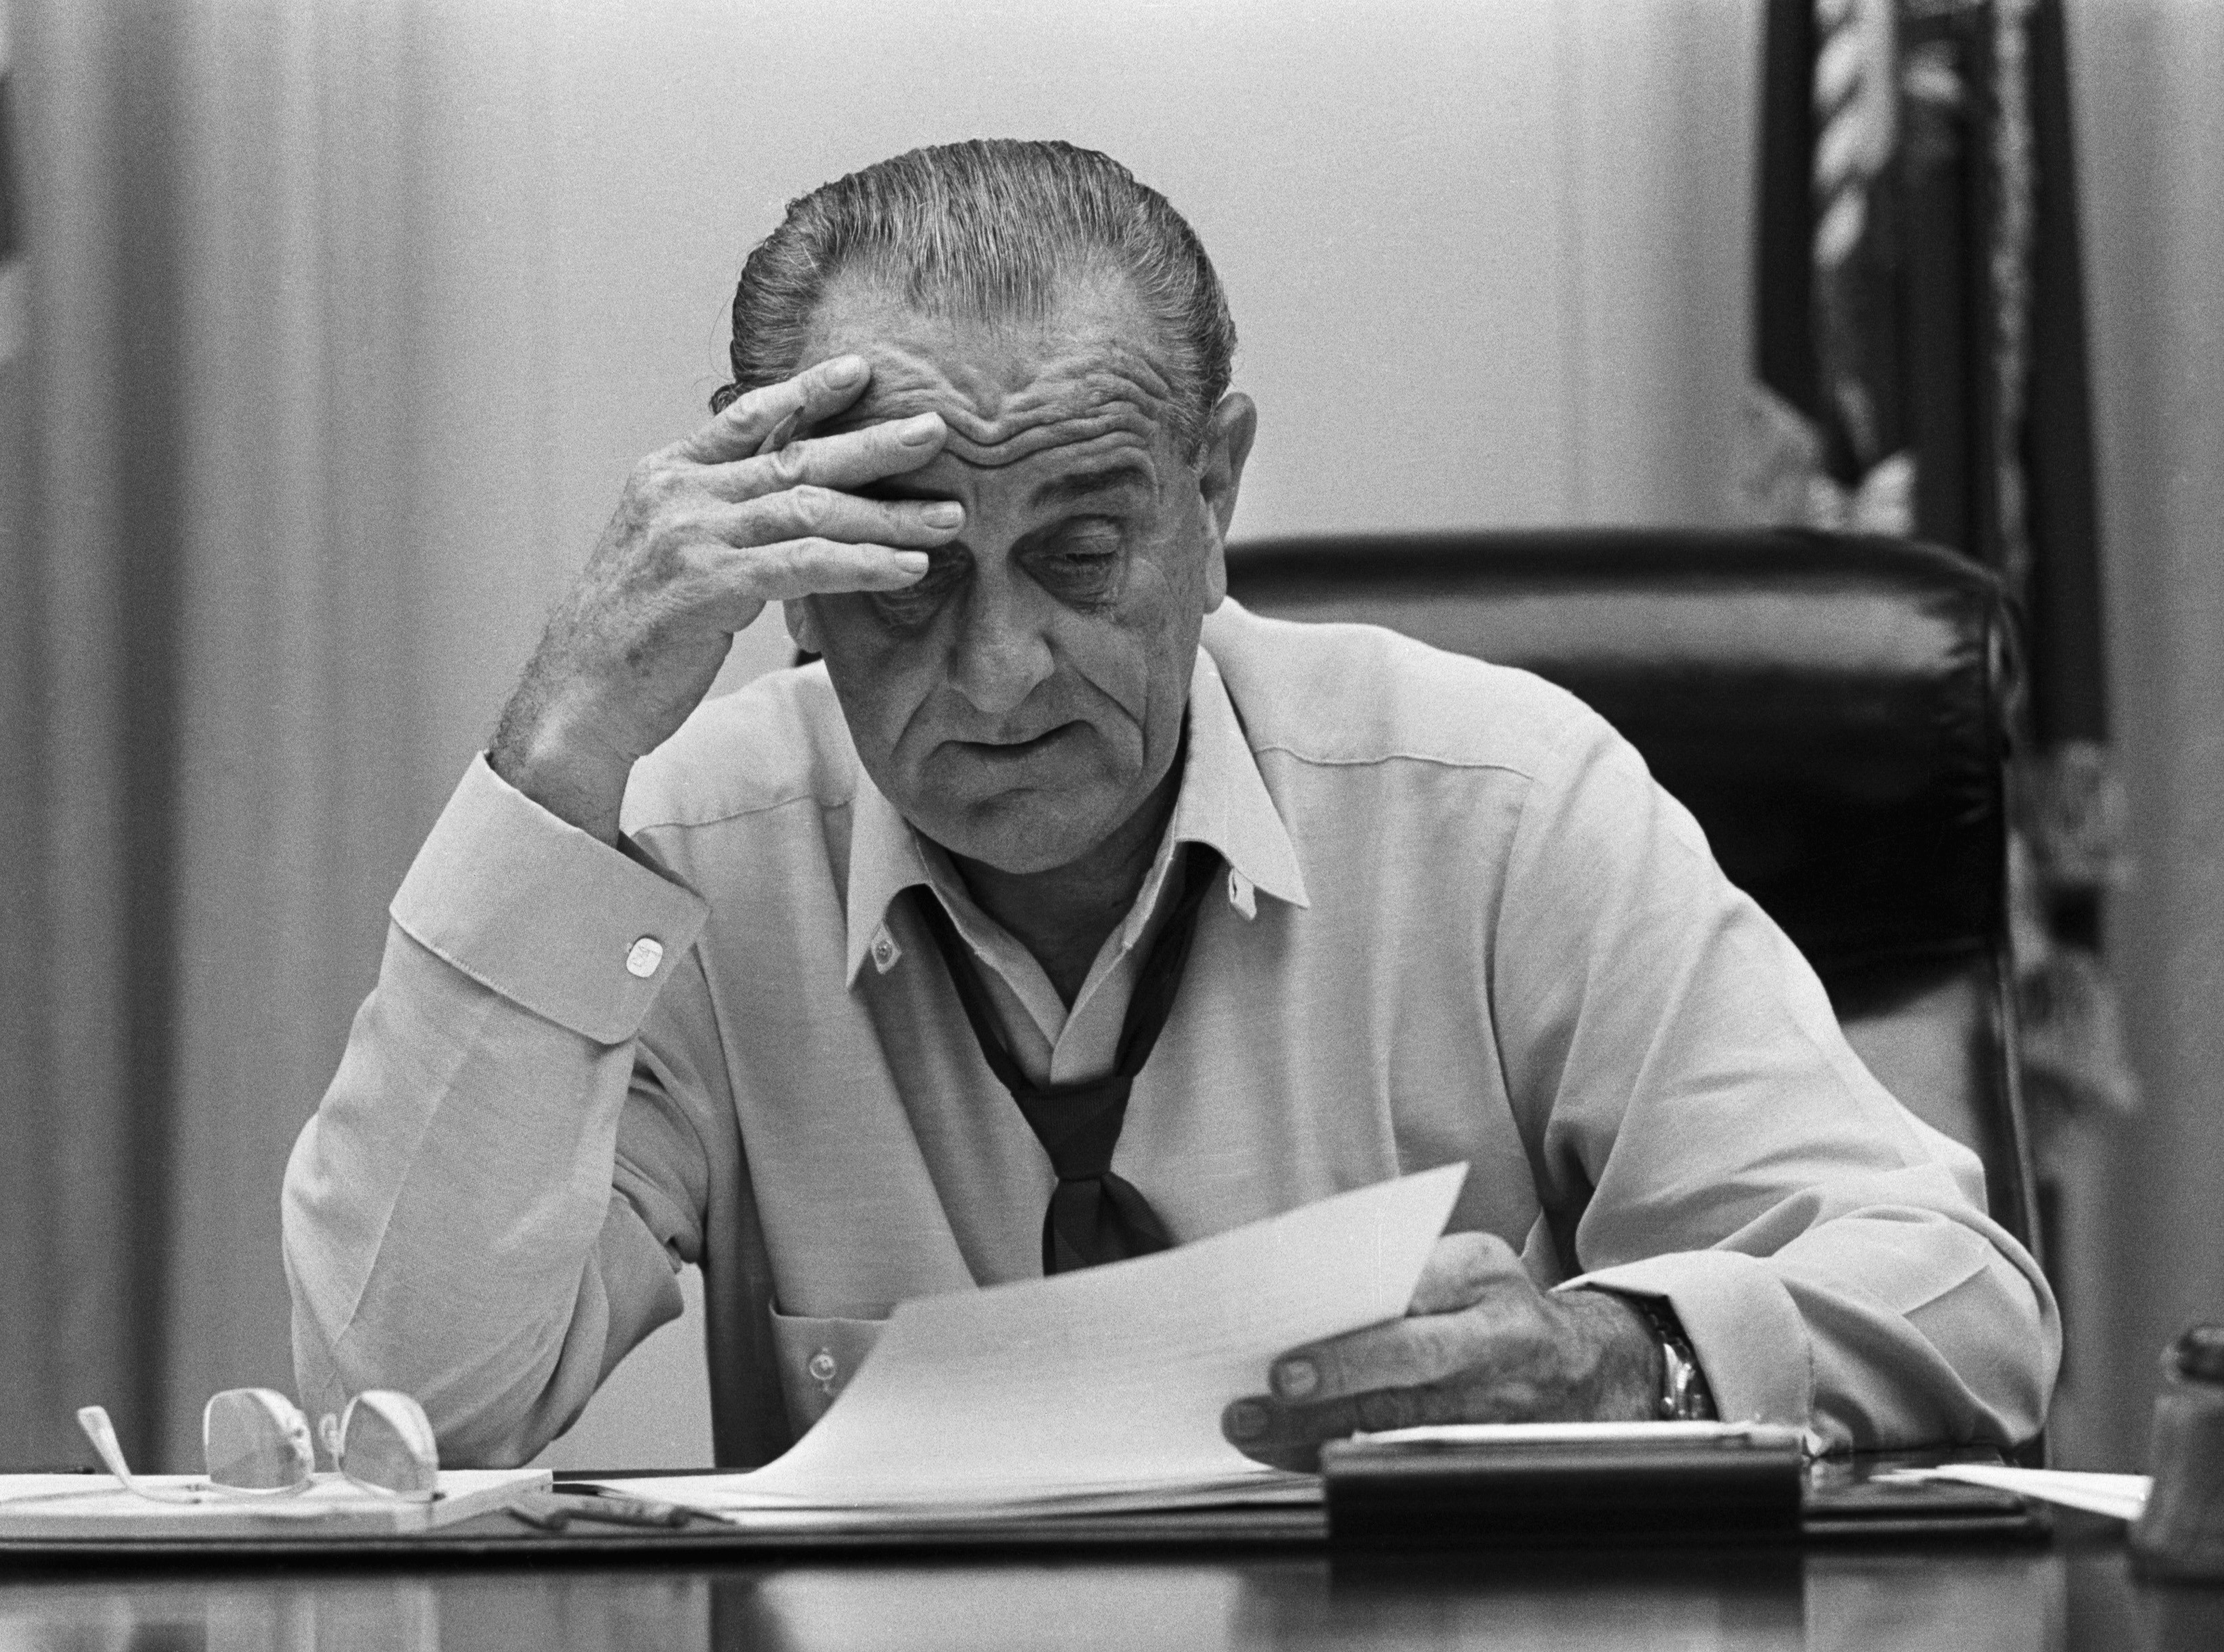 Lyndon B. Johnson, Presidents of the United States - desktop wallpaper